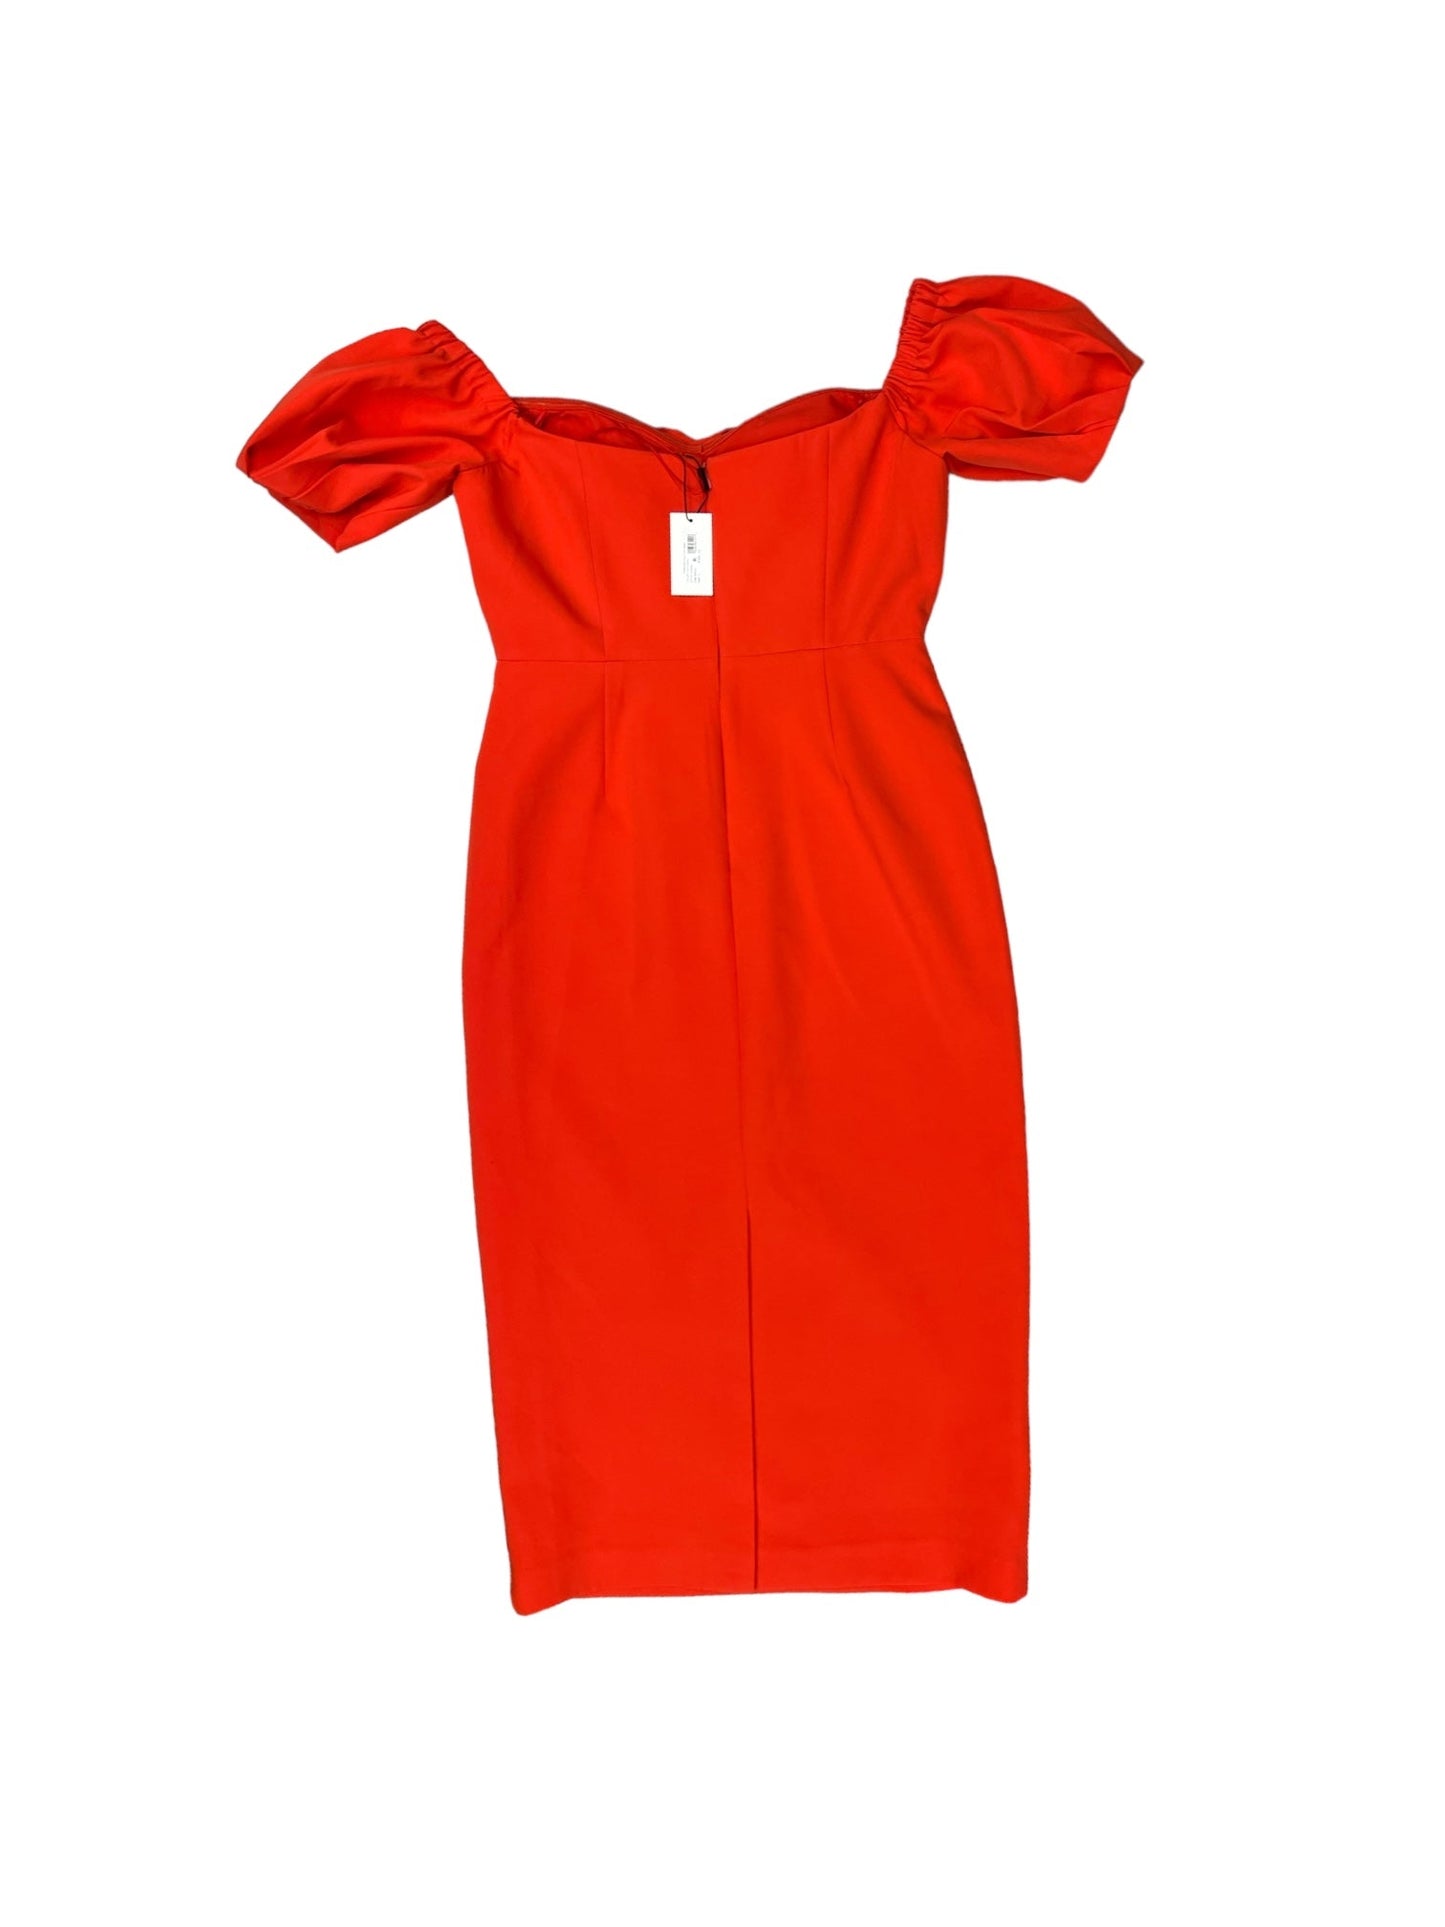 Orange Dress Designer Milly, Size 10